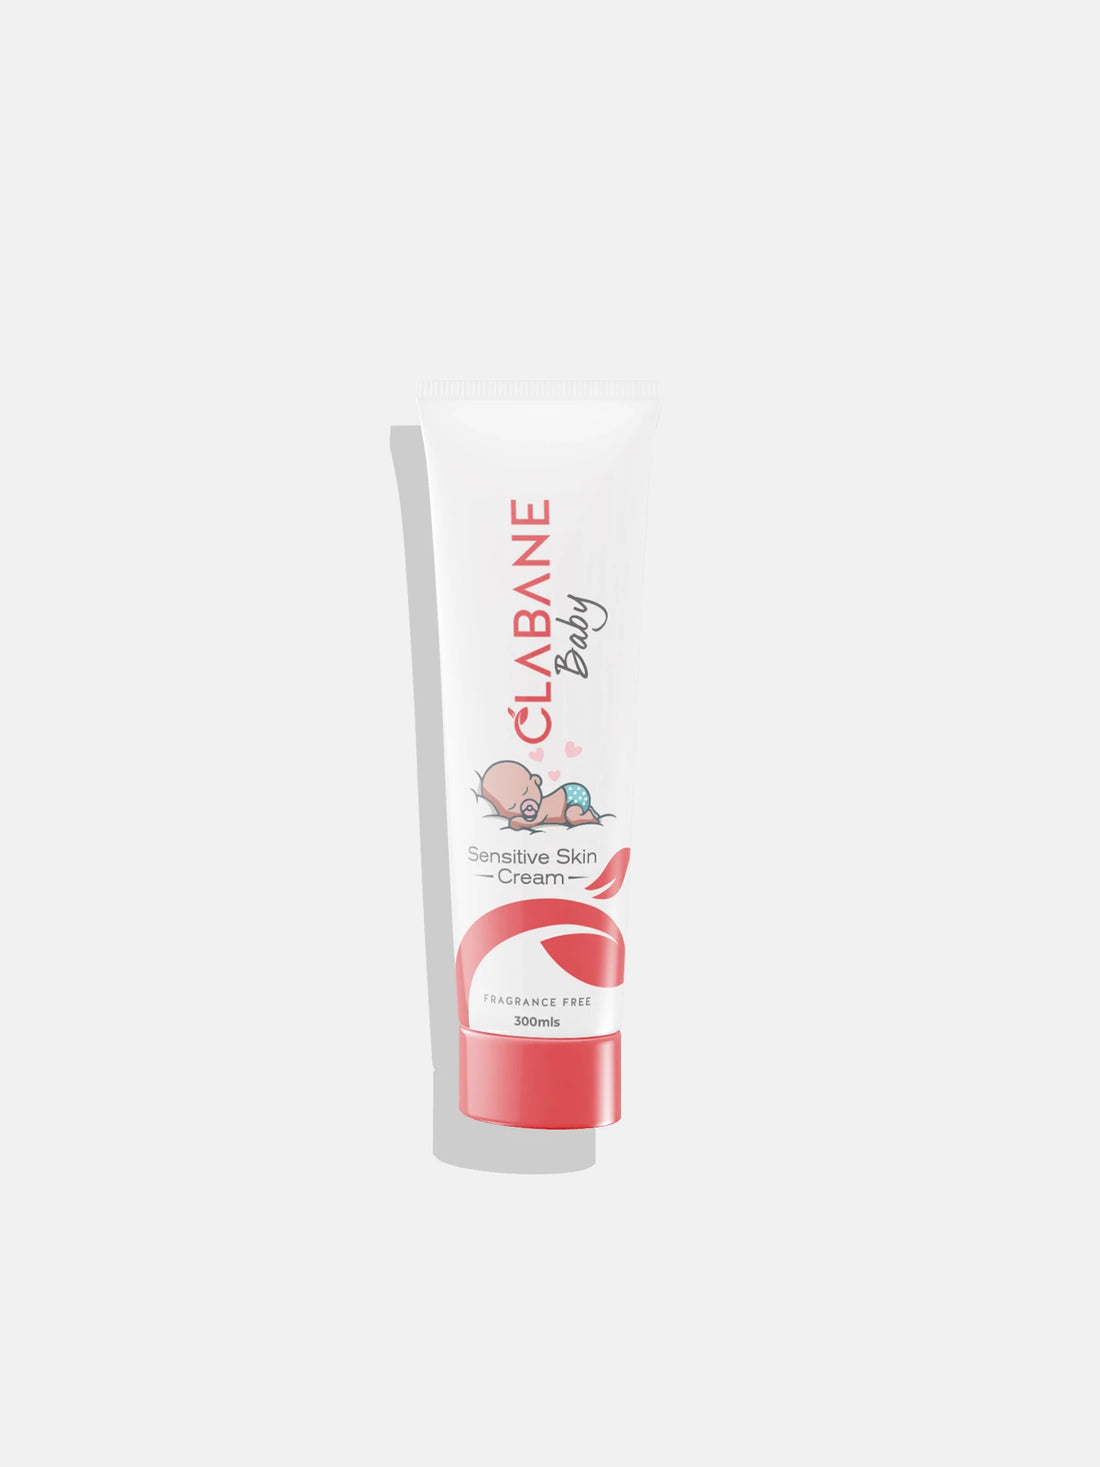 Clabane Baby Sensitive Skin Cream